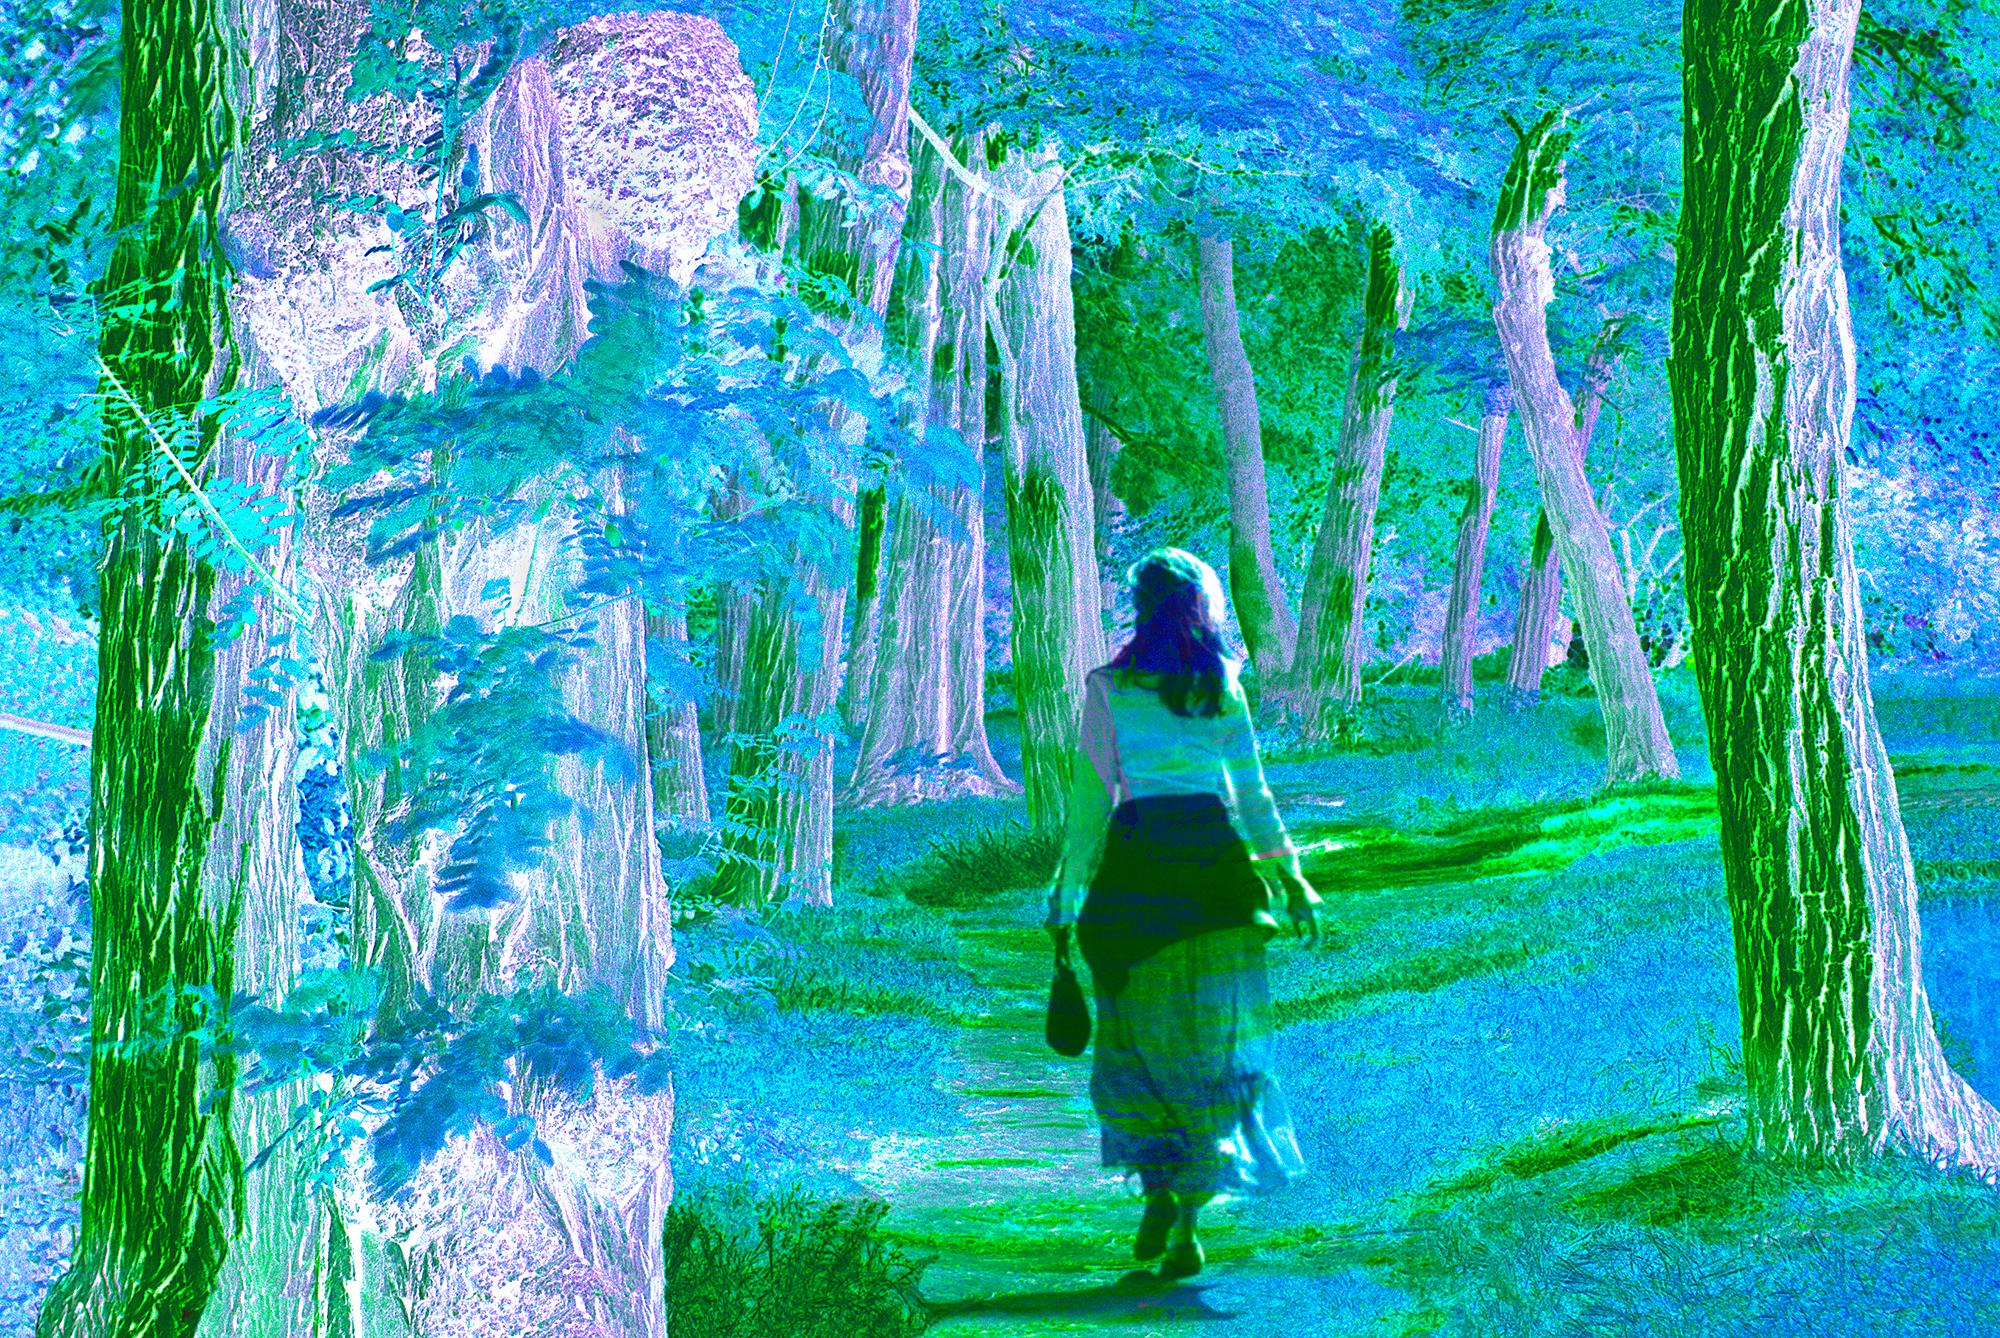  Dream Landscape - Woman Strolls in Fantasy Forest of Blue Green